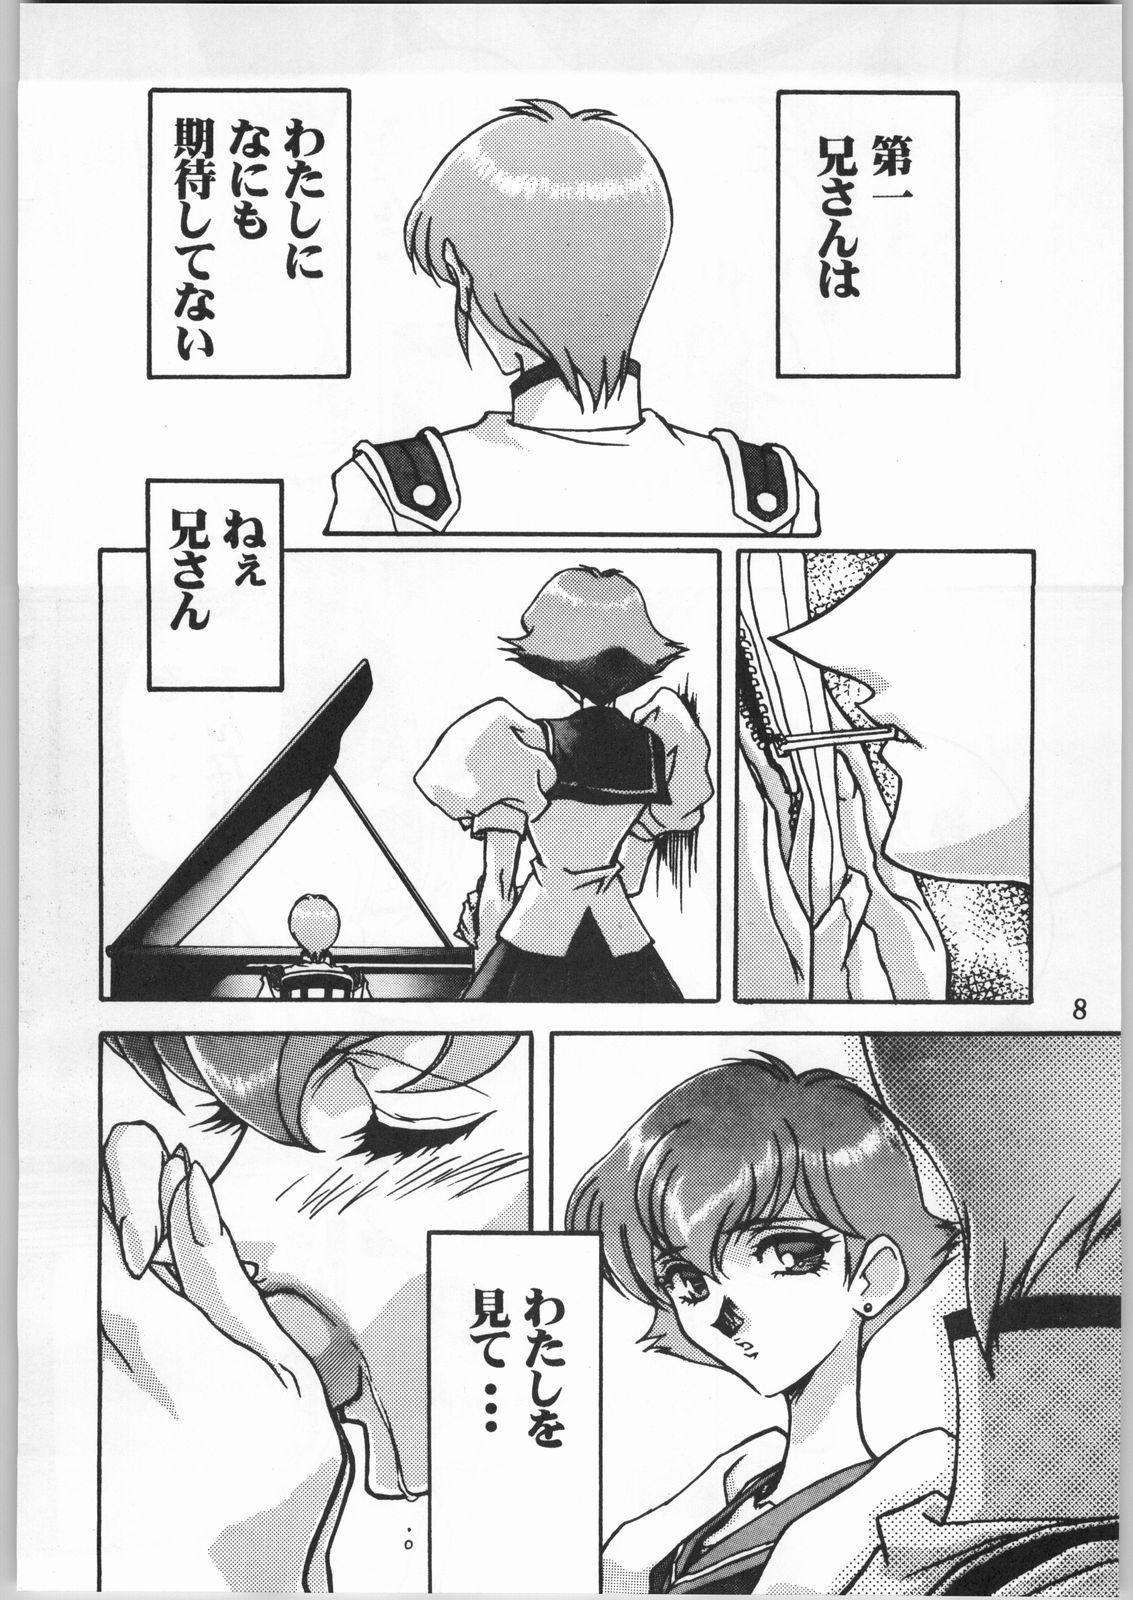 Nylons Shinobu Akira Kojinshi 2 - Tenchi muyo Battle athletes Revolutionary girl utena Agent aika Insertion - Page 9